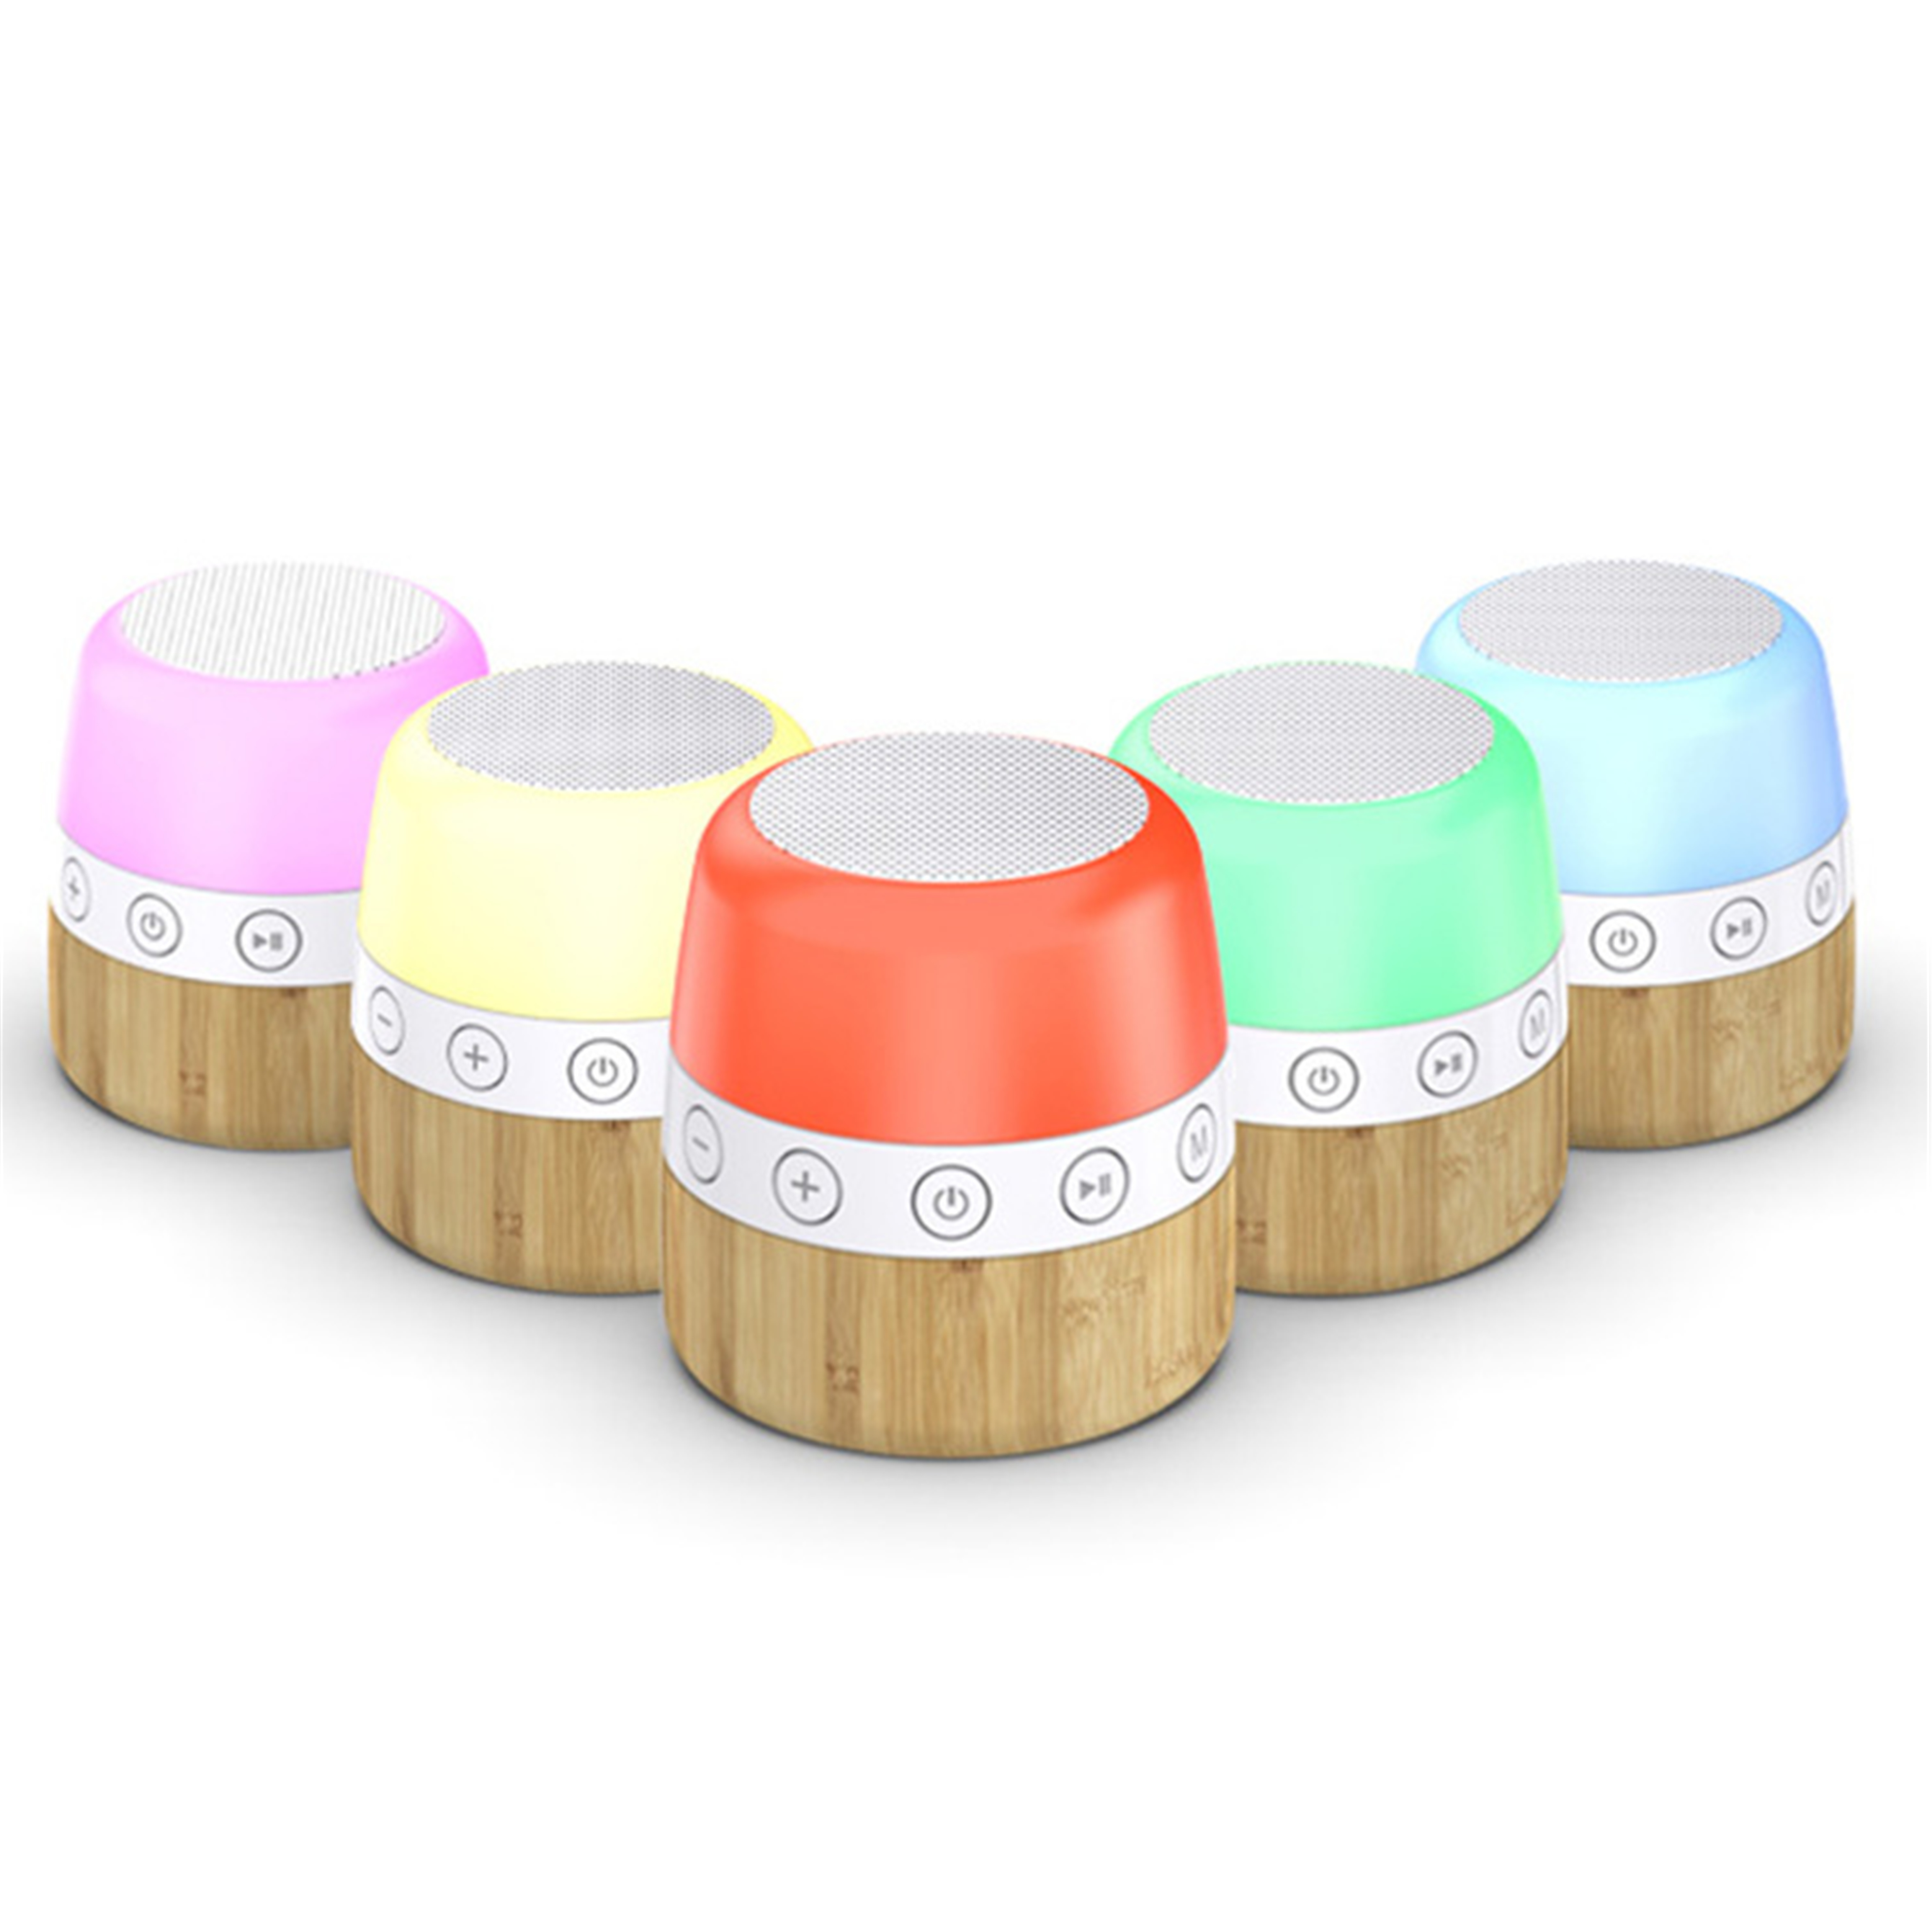 Portable wooden simple mini speaker Outdoor creative Bluetooth speaker Nightlight